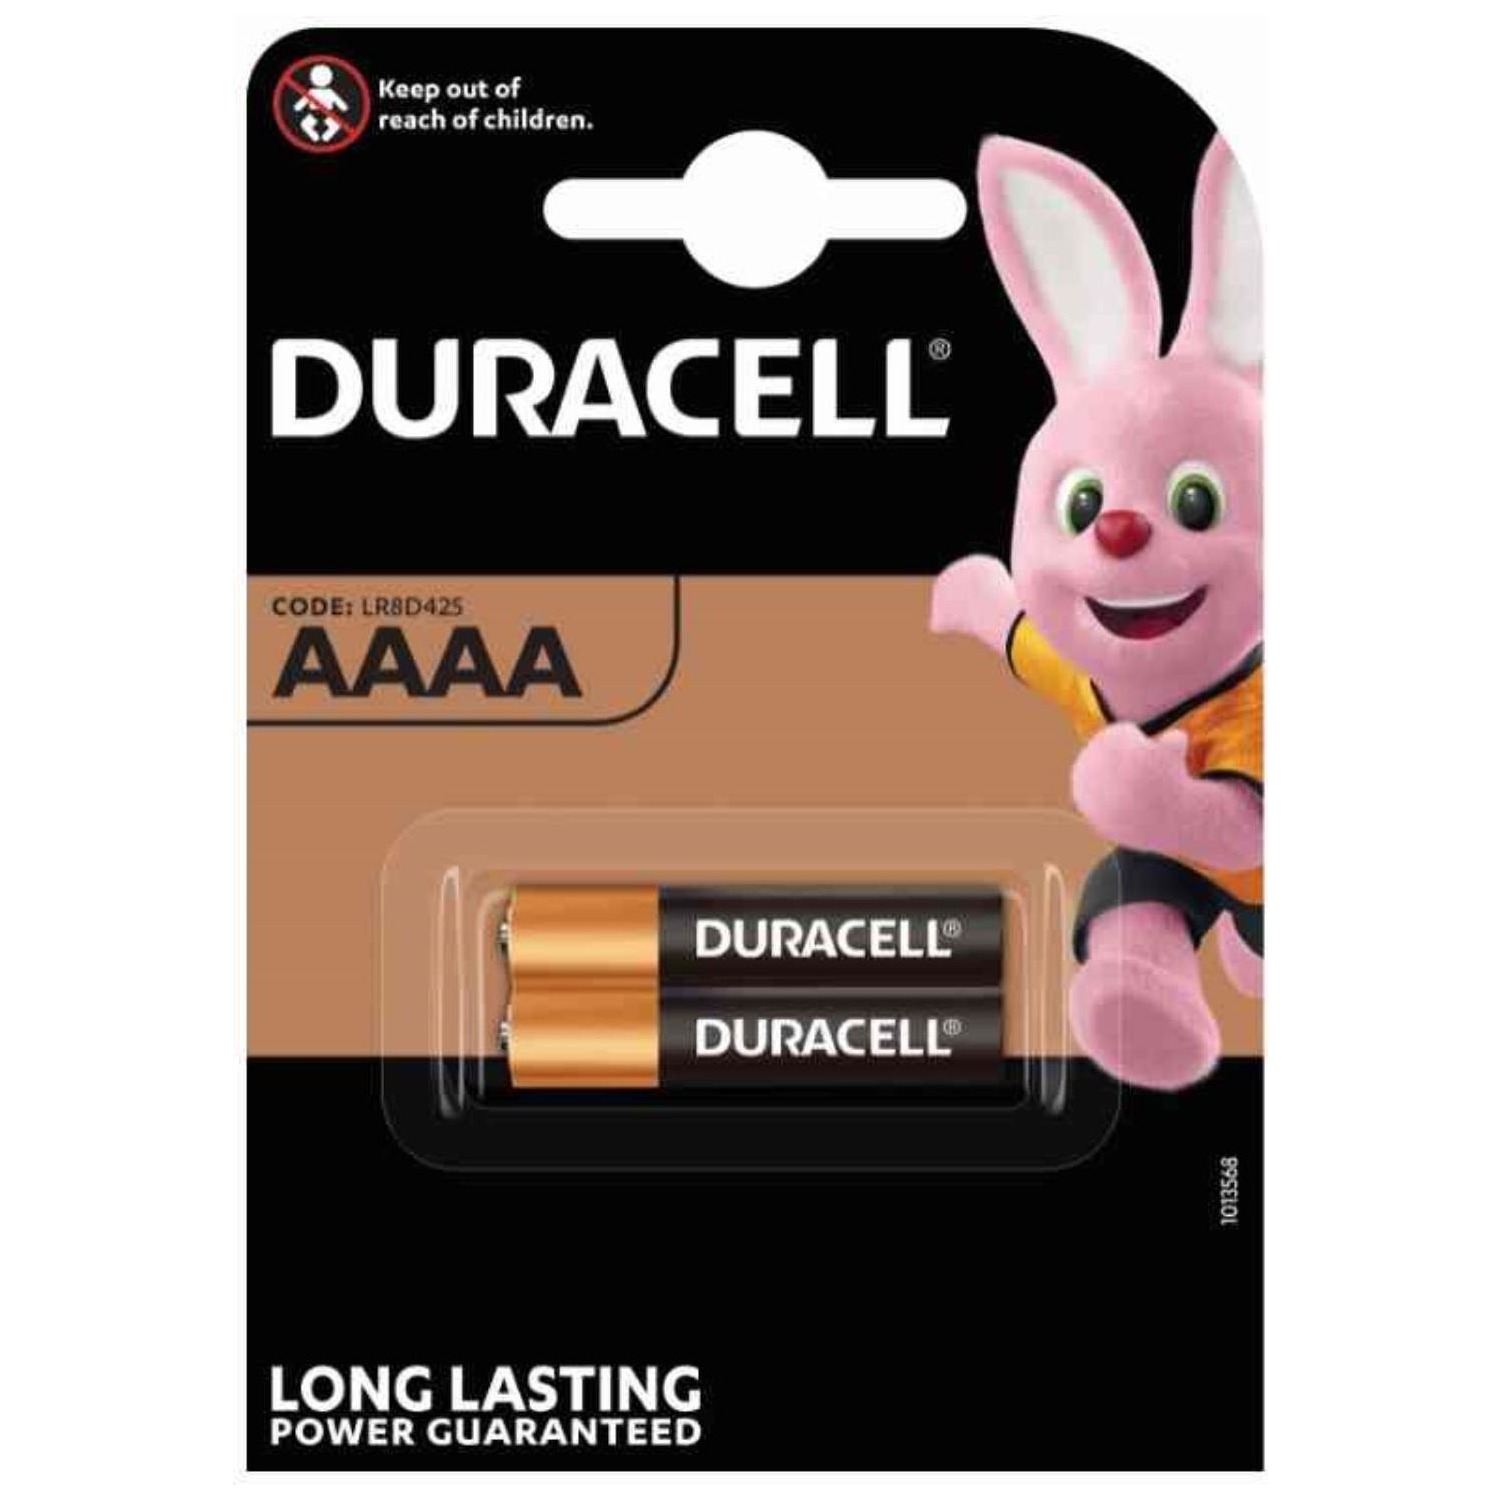 Immagine per Batteria pila speciale Duracell AAAA MX2500 da DIMOStore